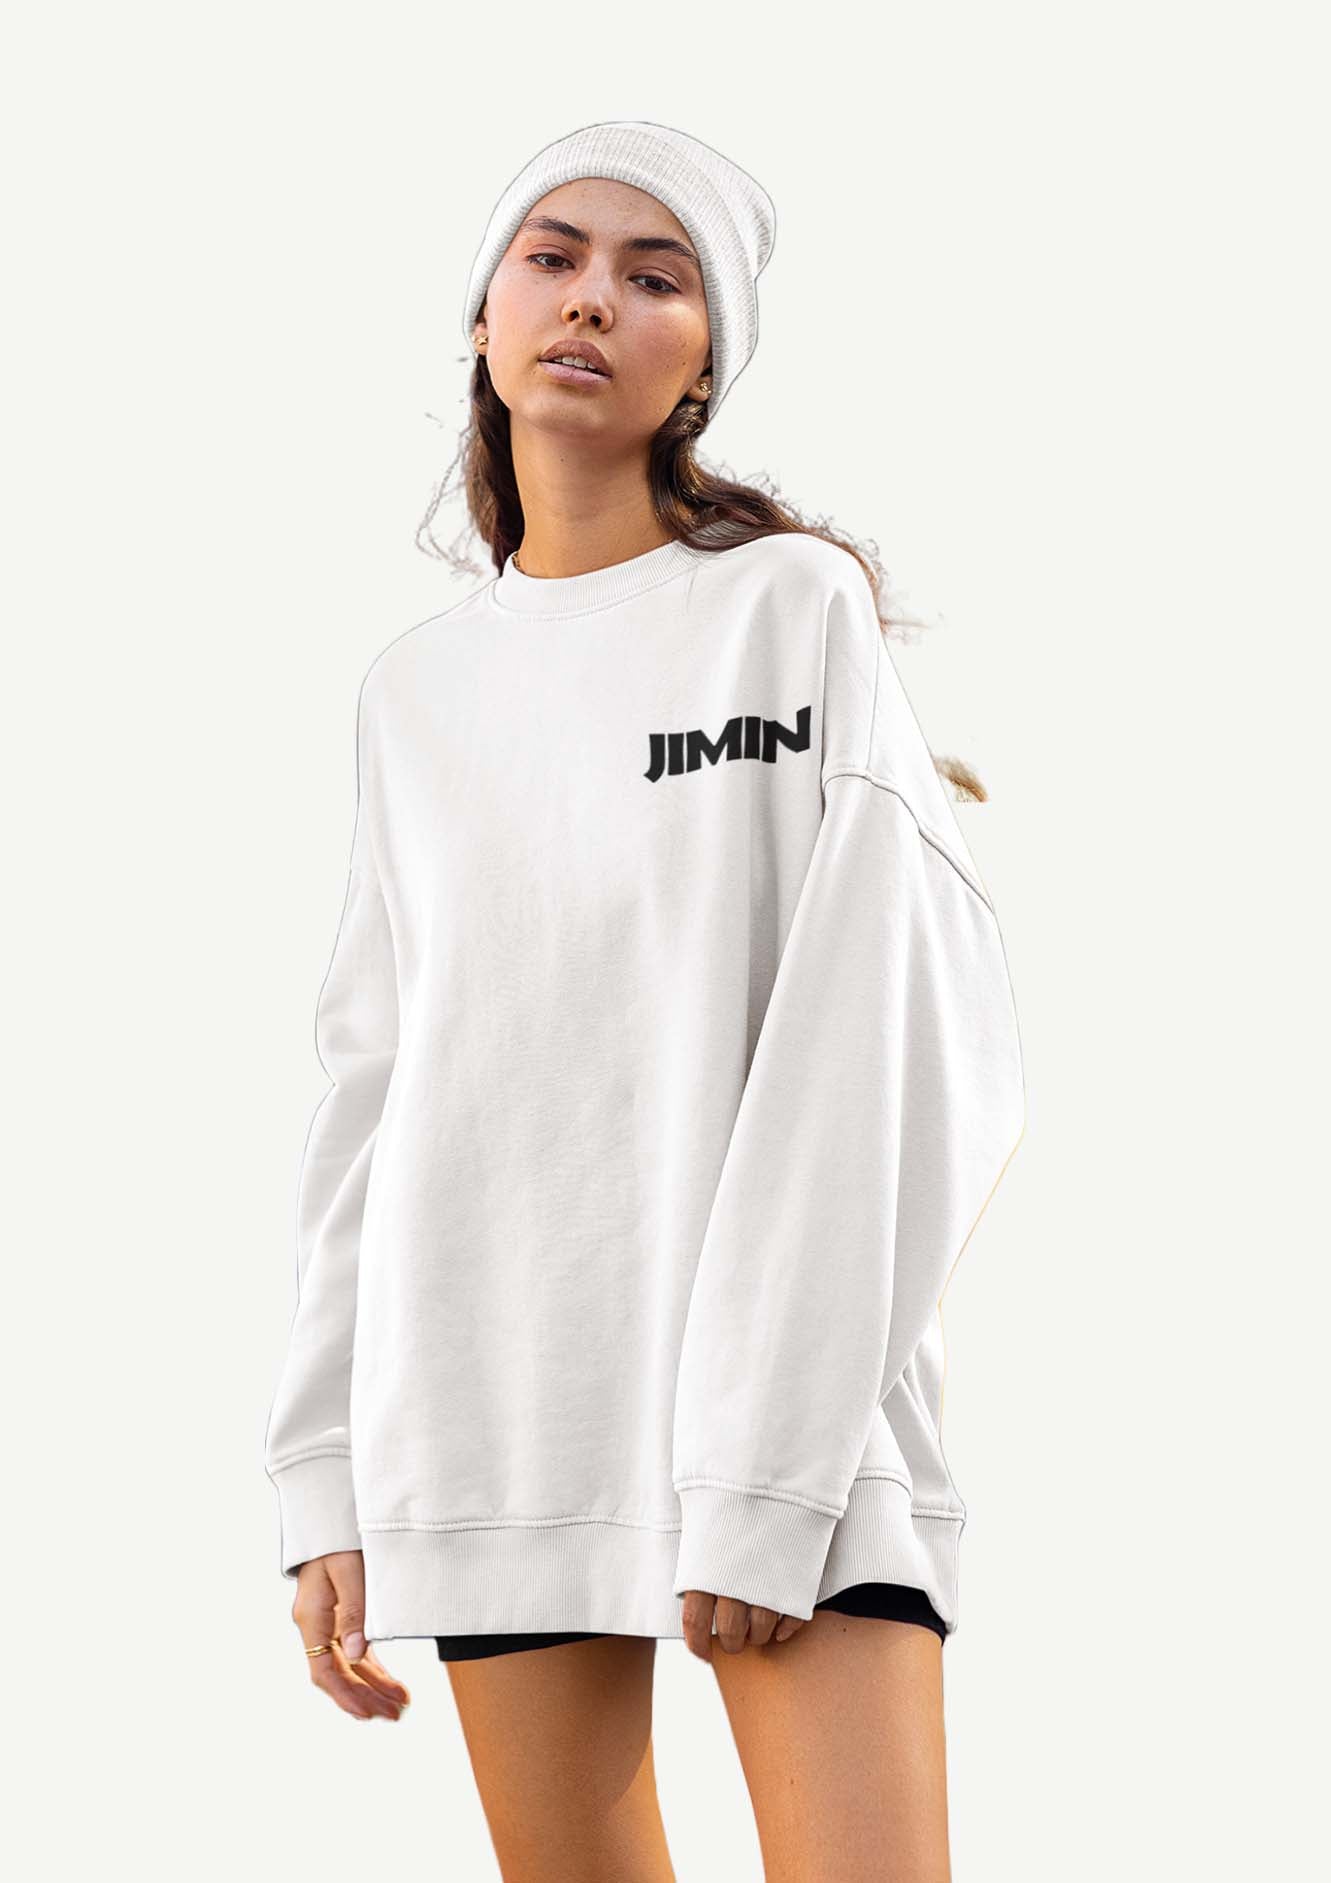 BTS - Be A Good Human Jimin Unisex Sweatshirt